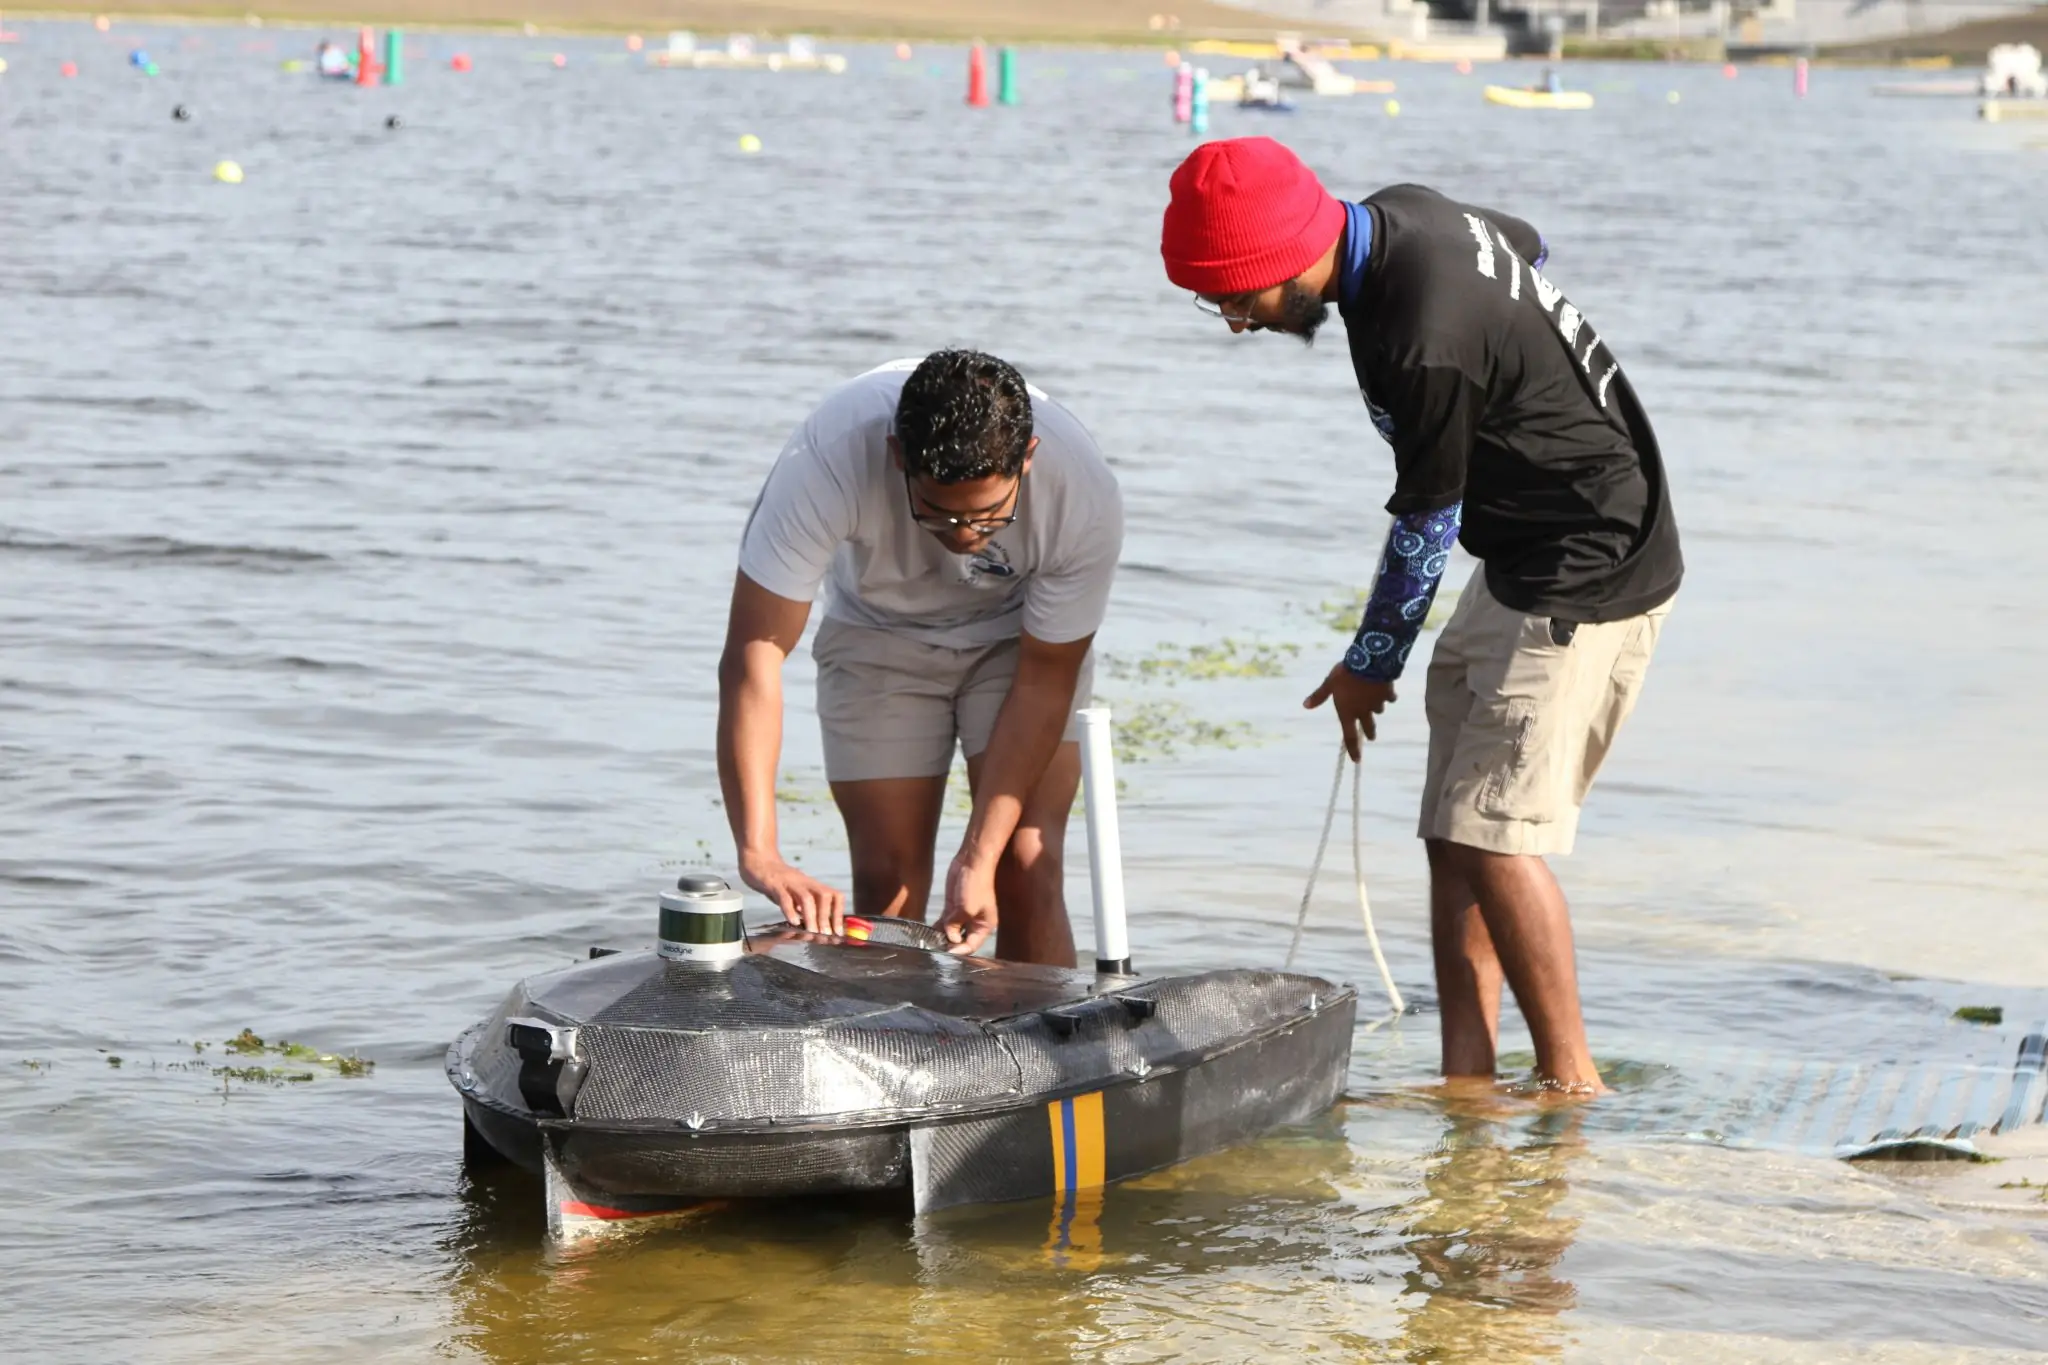 Asheya Naik works on UM::Autonomy's boat, the Phoenix, at the 2023 RoboBoat competition